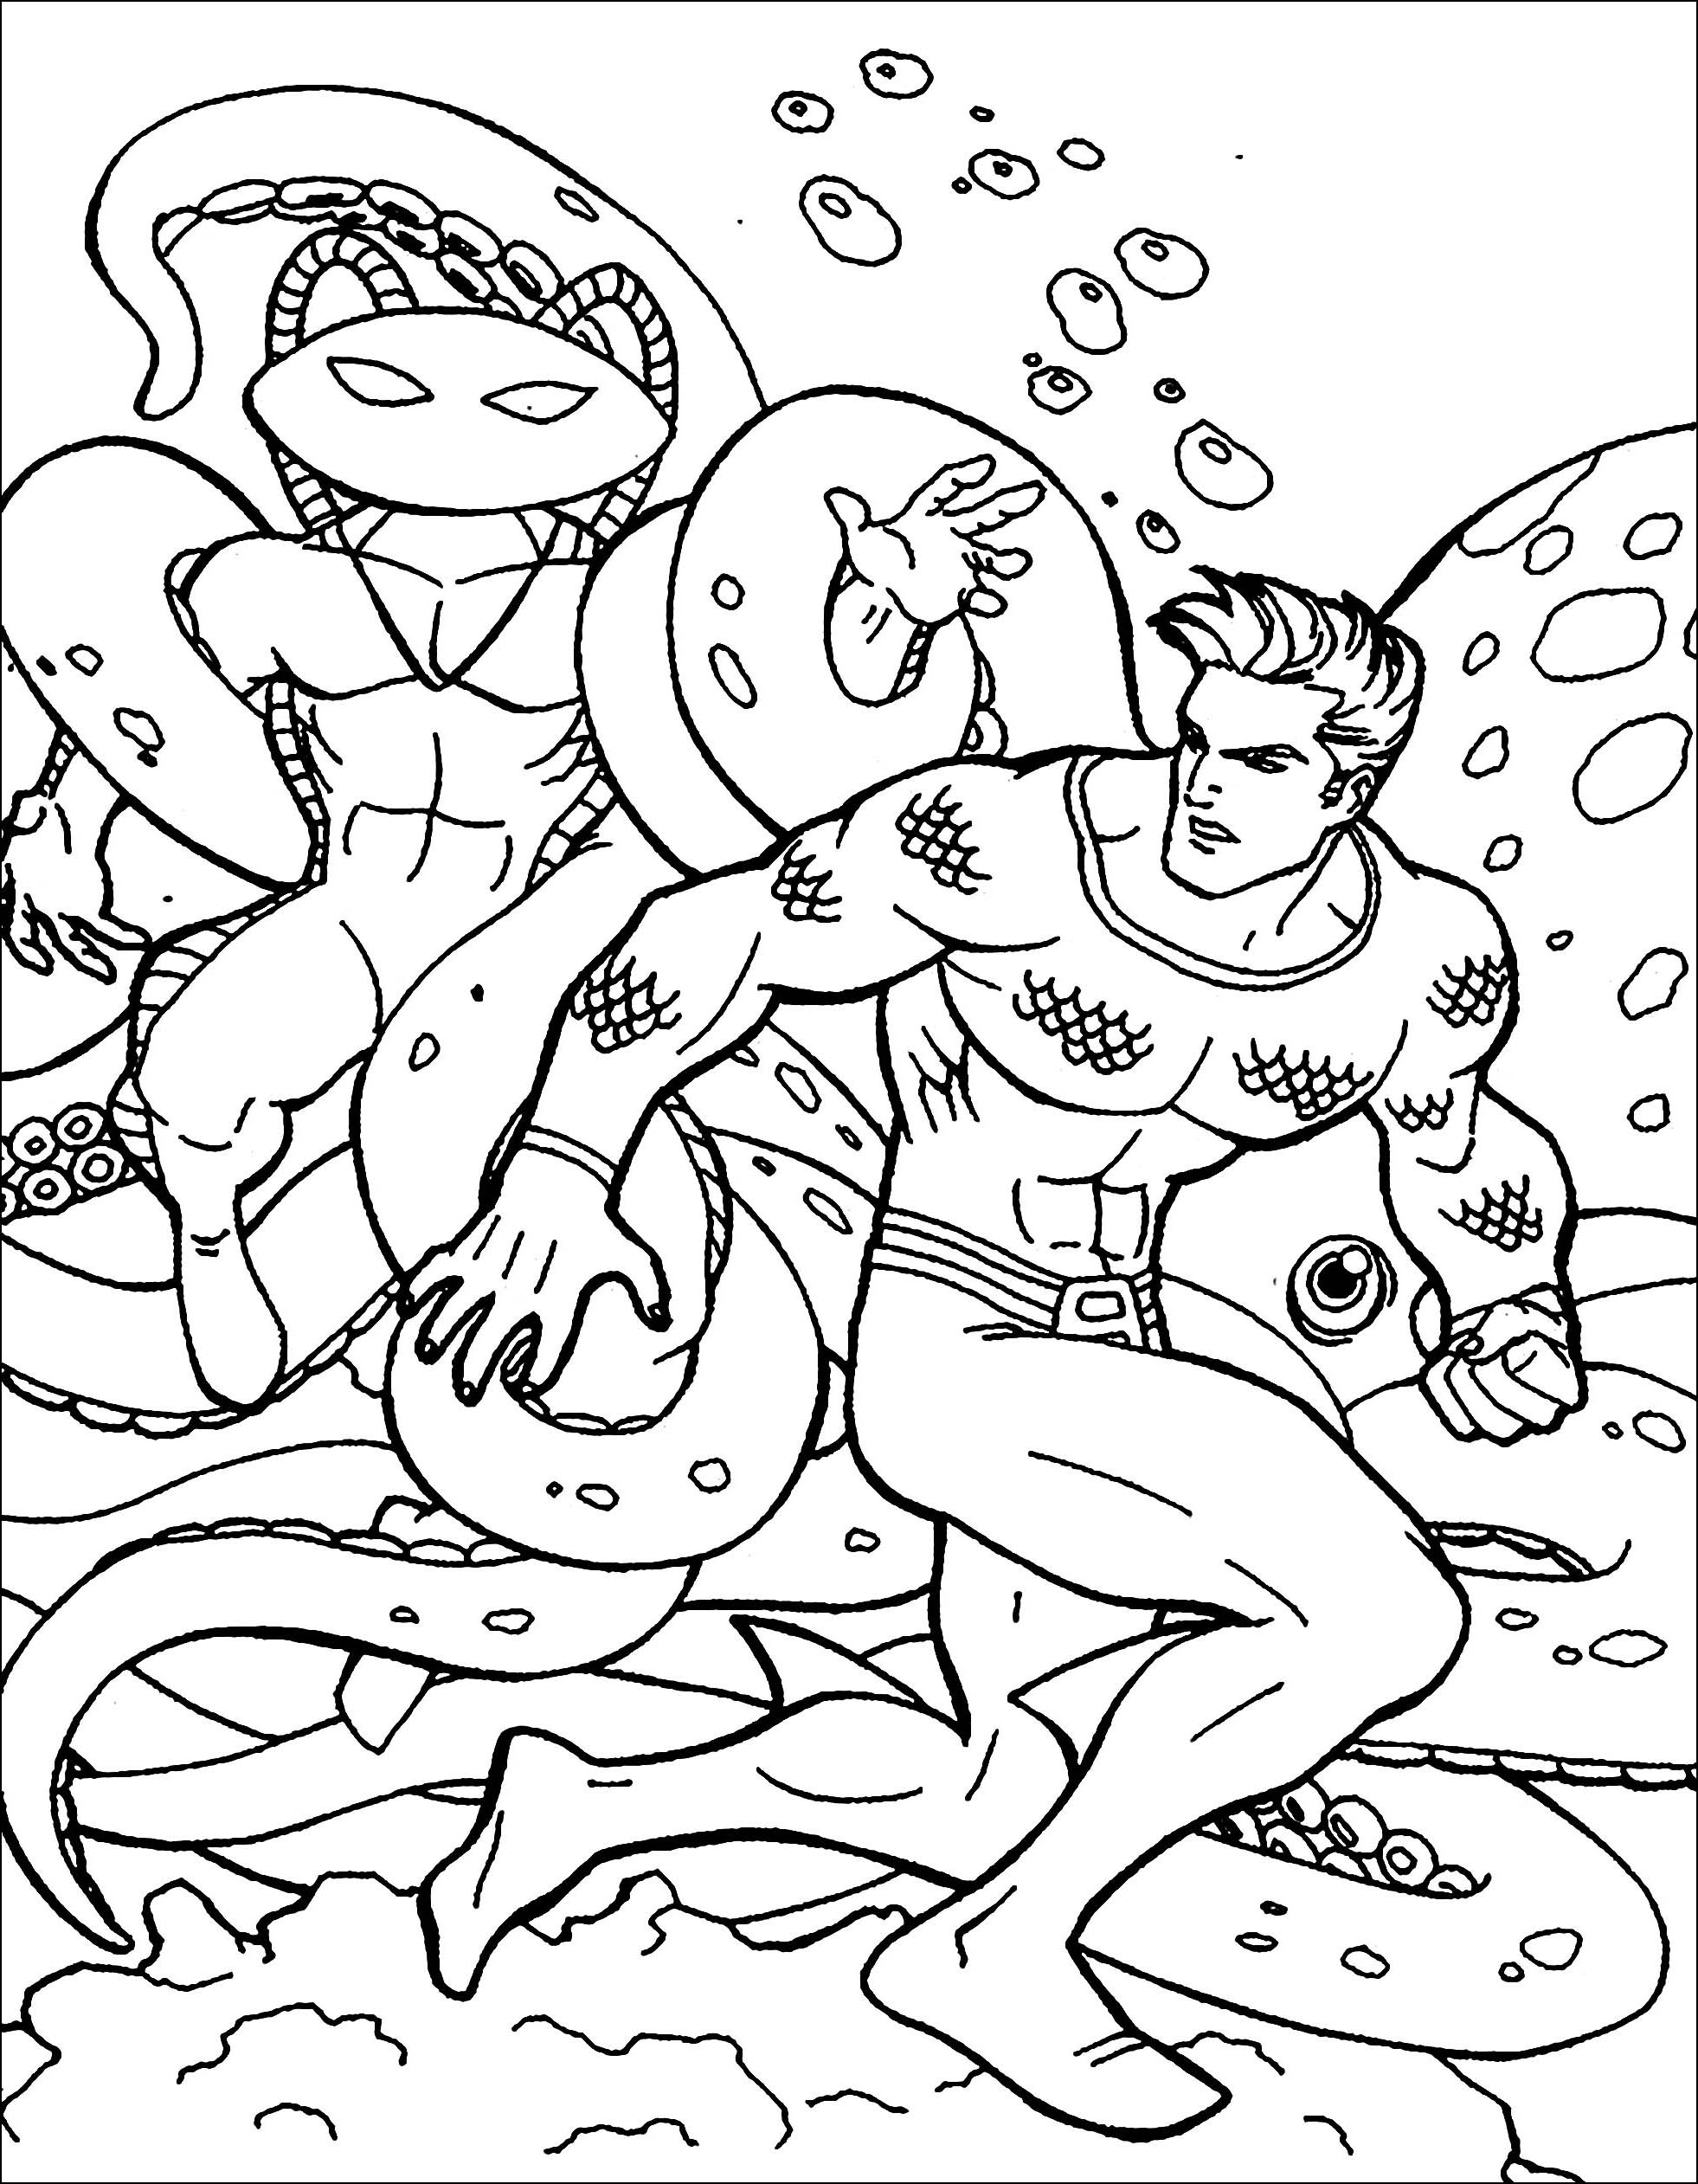 Divertidas páginas coloridas de Aquaman para imprimir e colorir